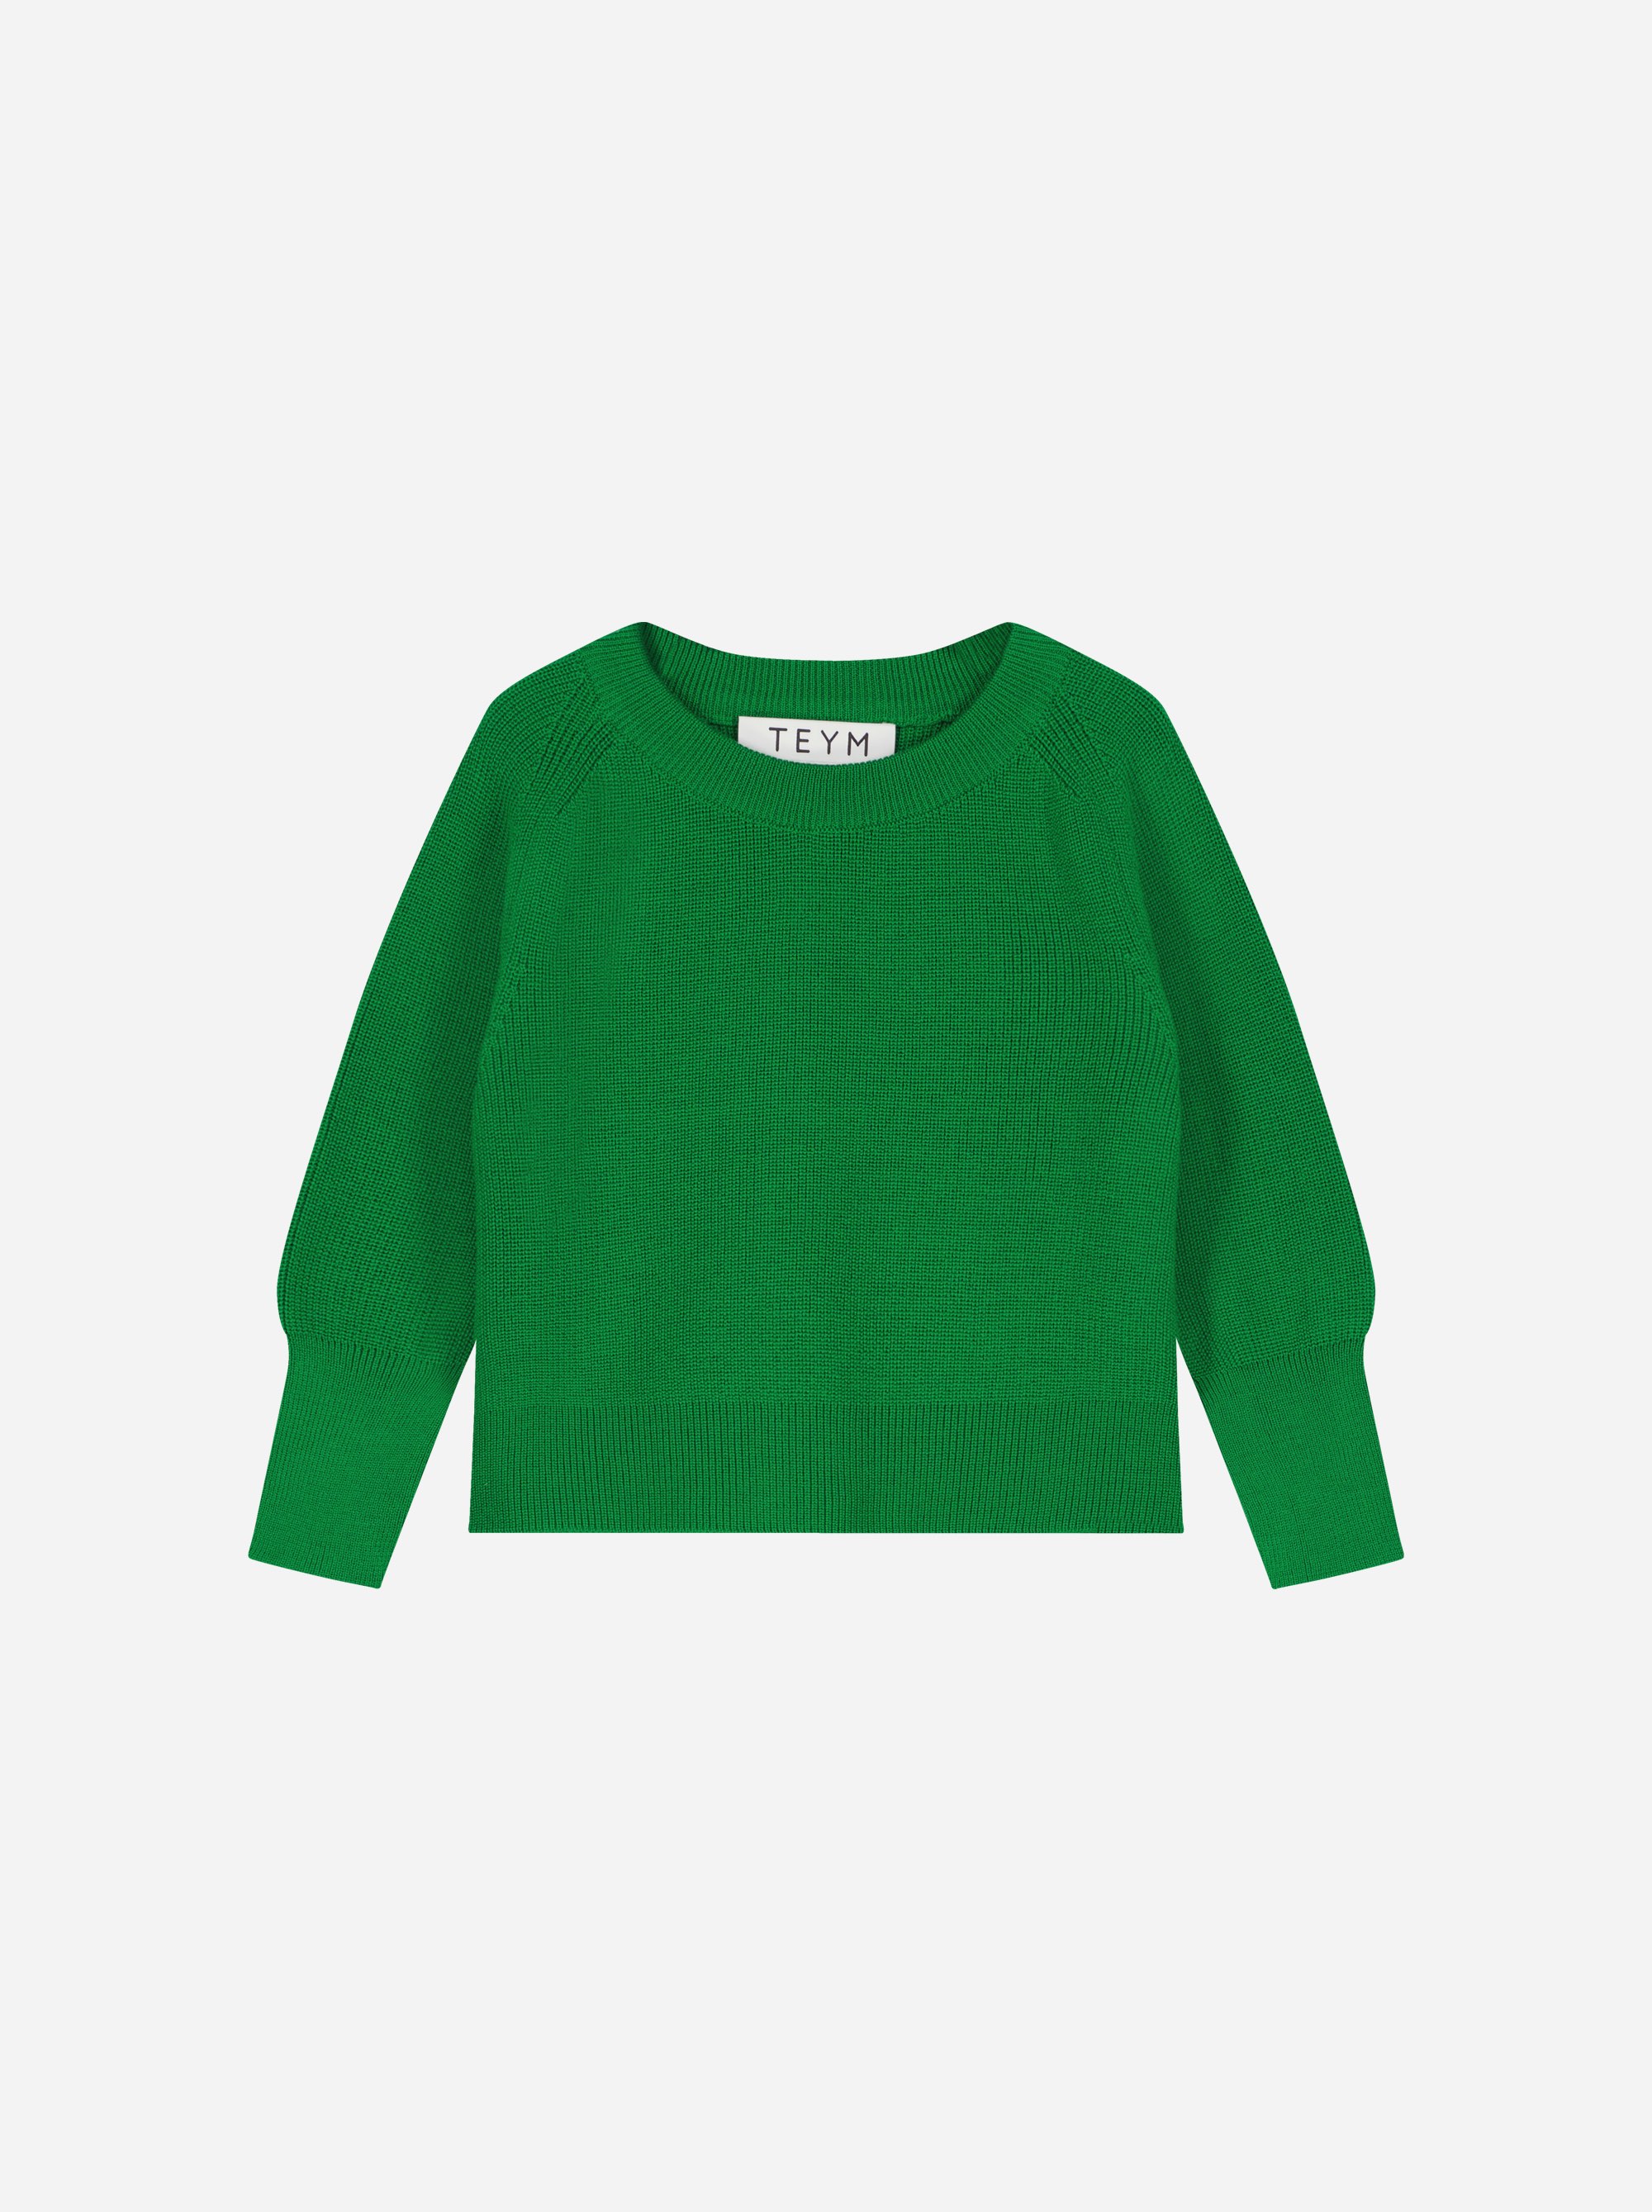 Teym_Merino Sweater_Bright Green_Kids_front_1